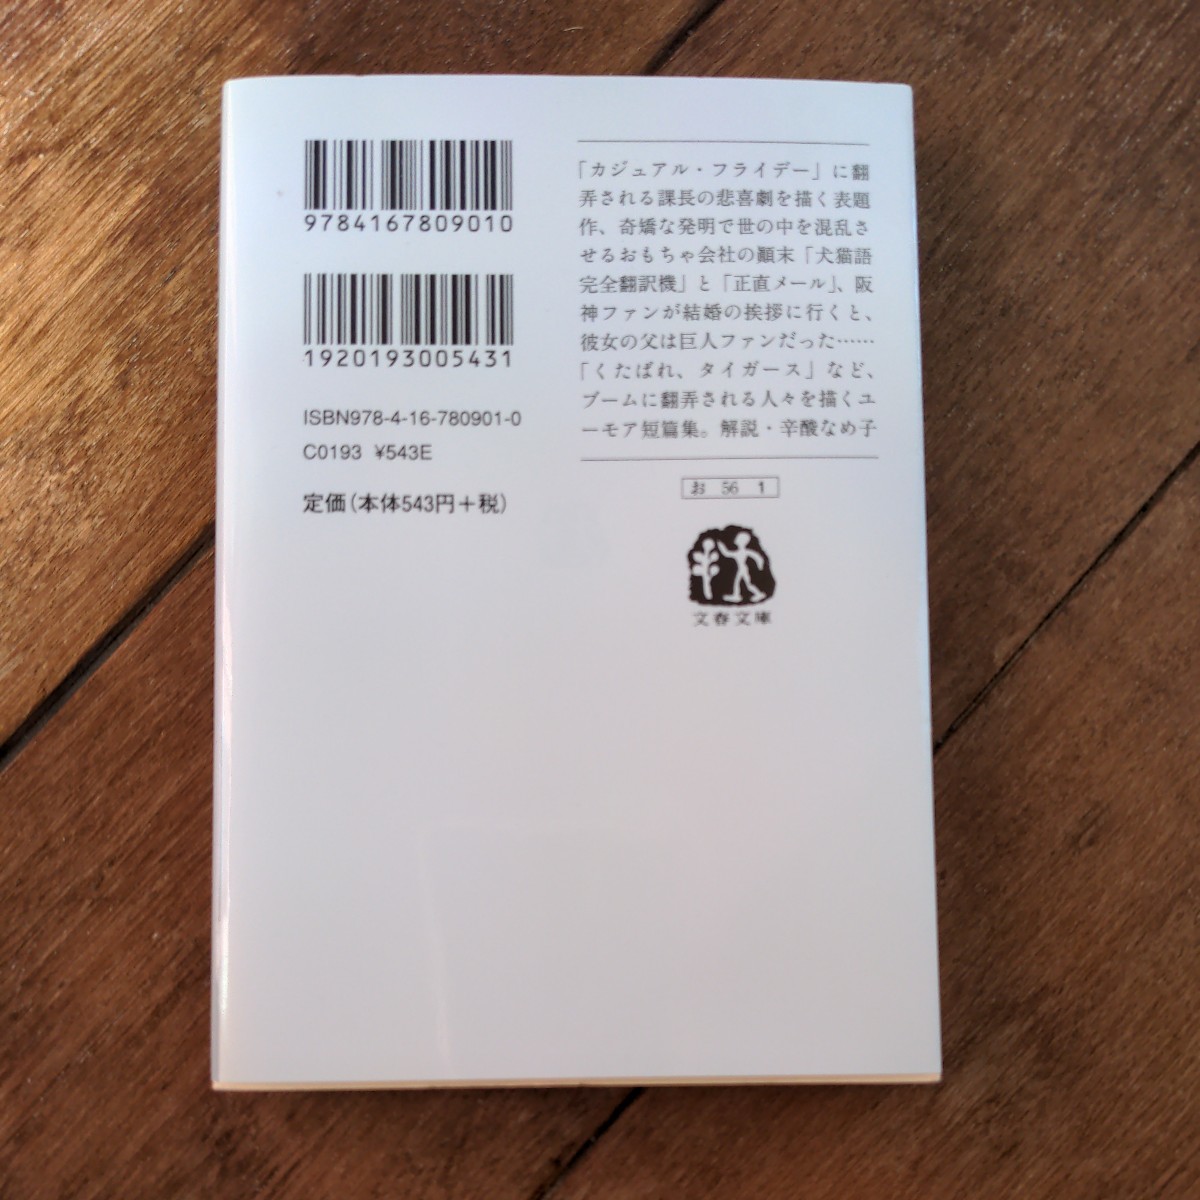  somewhat . person ./ Ogiwara Hiroshi * publication / secondhand book / library book@/ novel /